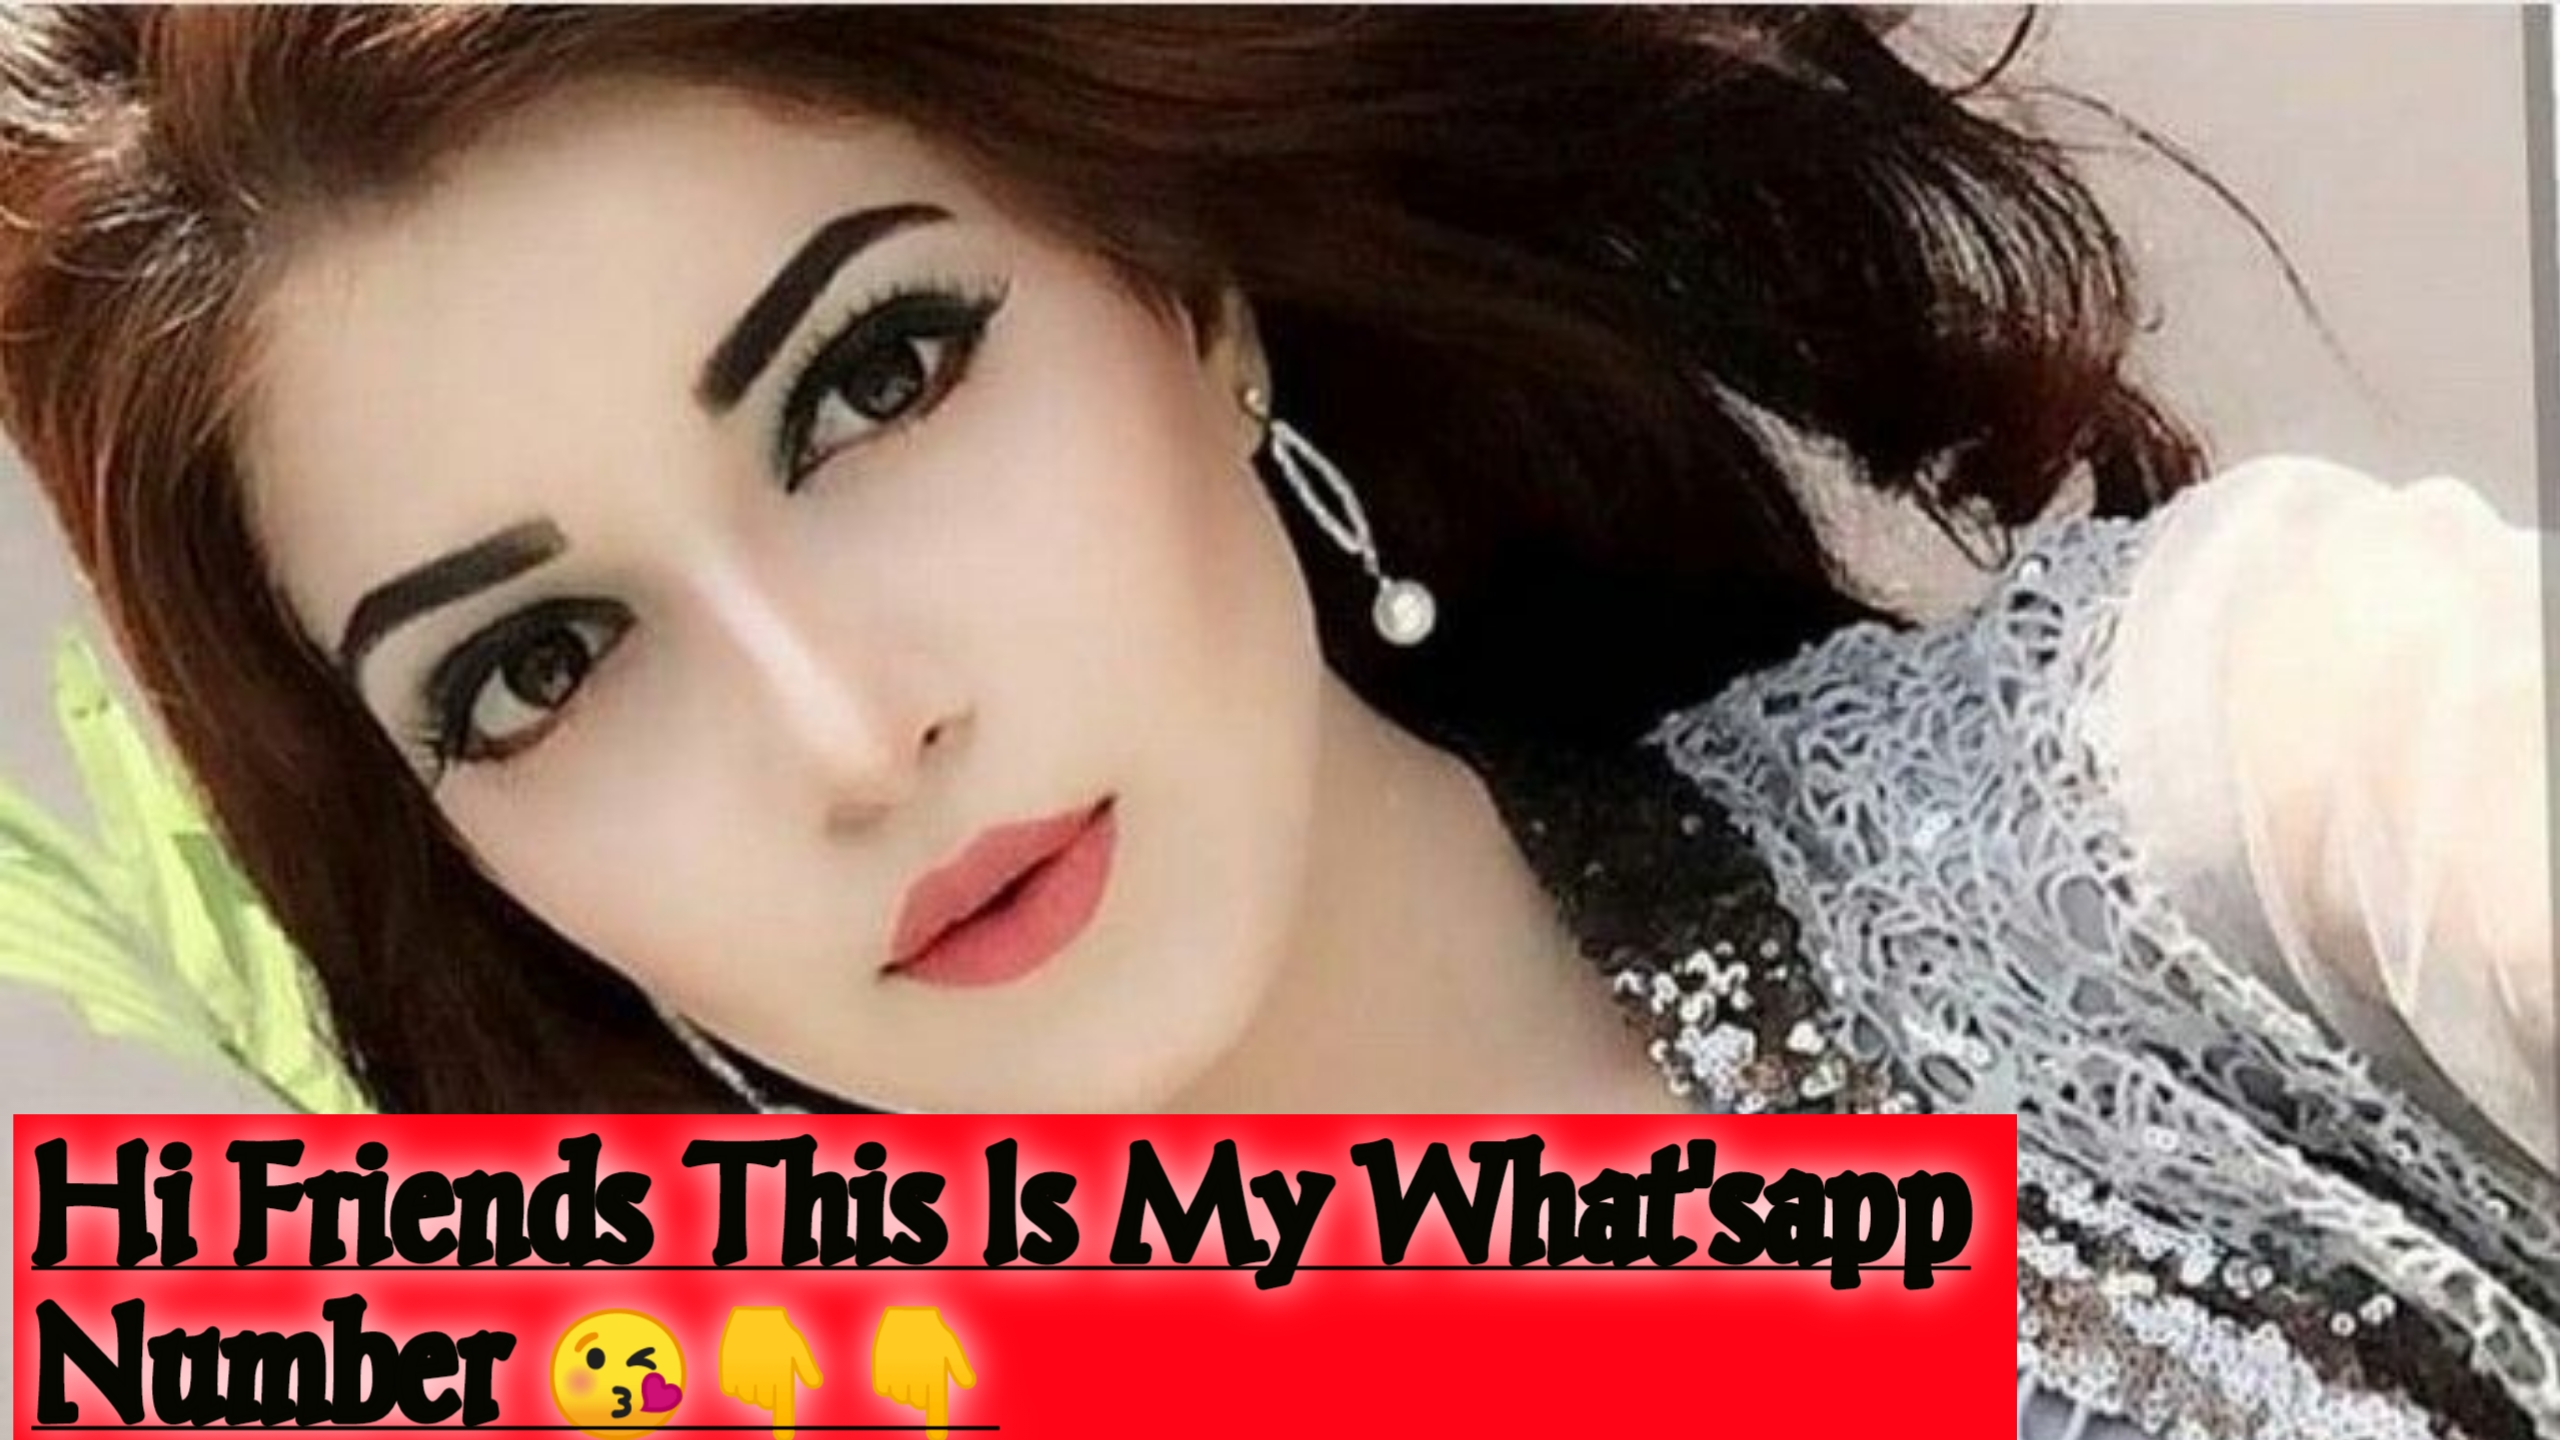 Online Chat Girl Friends Whatsapp Number In Pakistan.